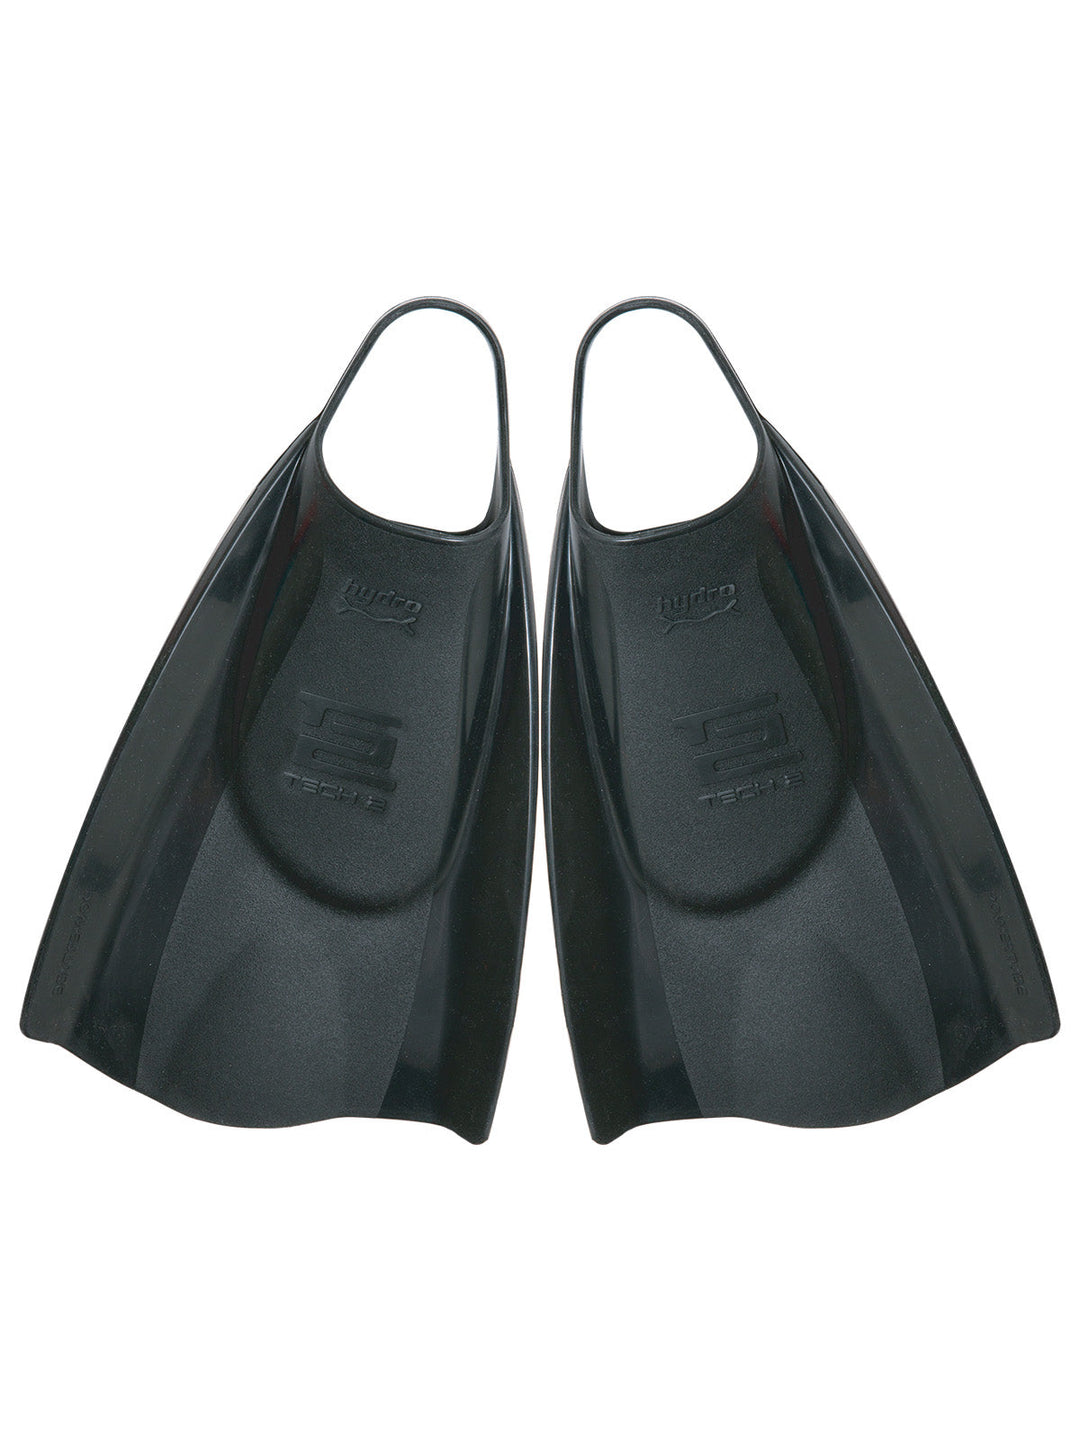 Hydro Bodyboard Fins Black